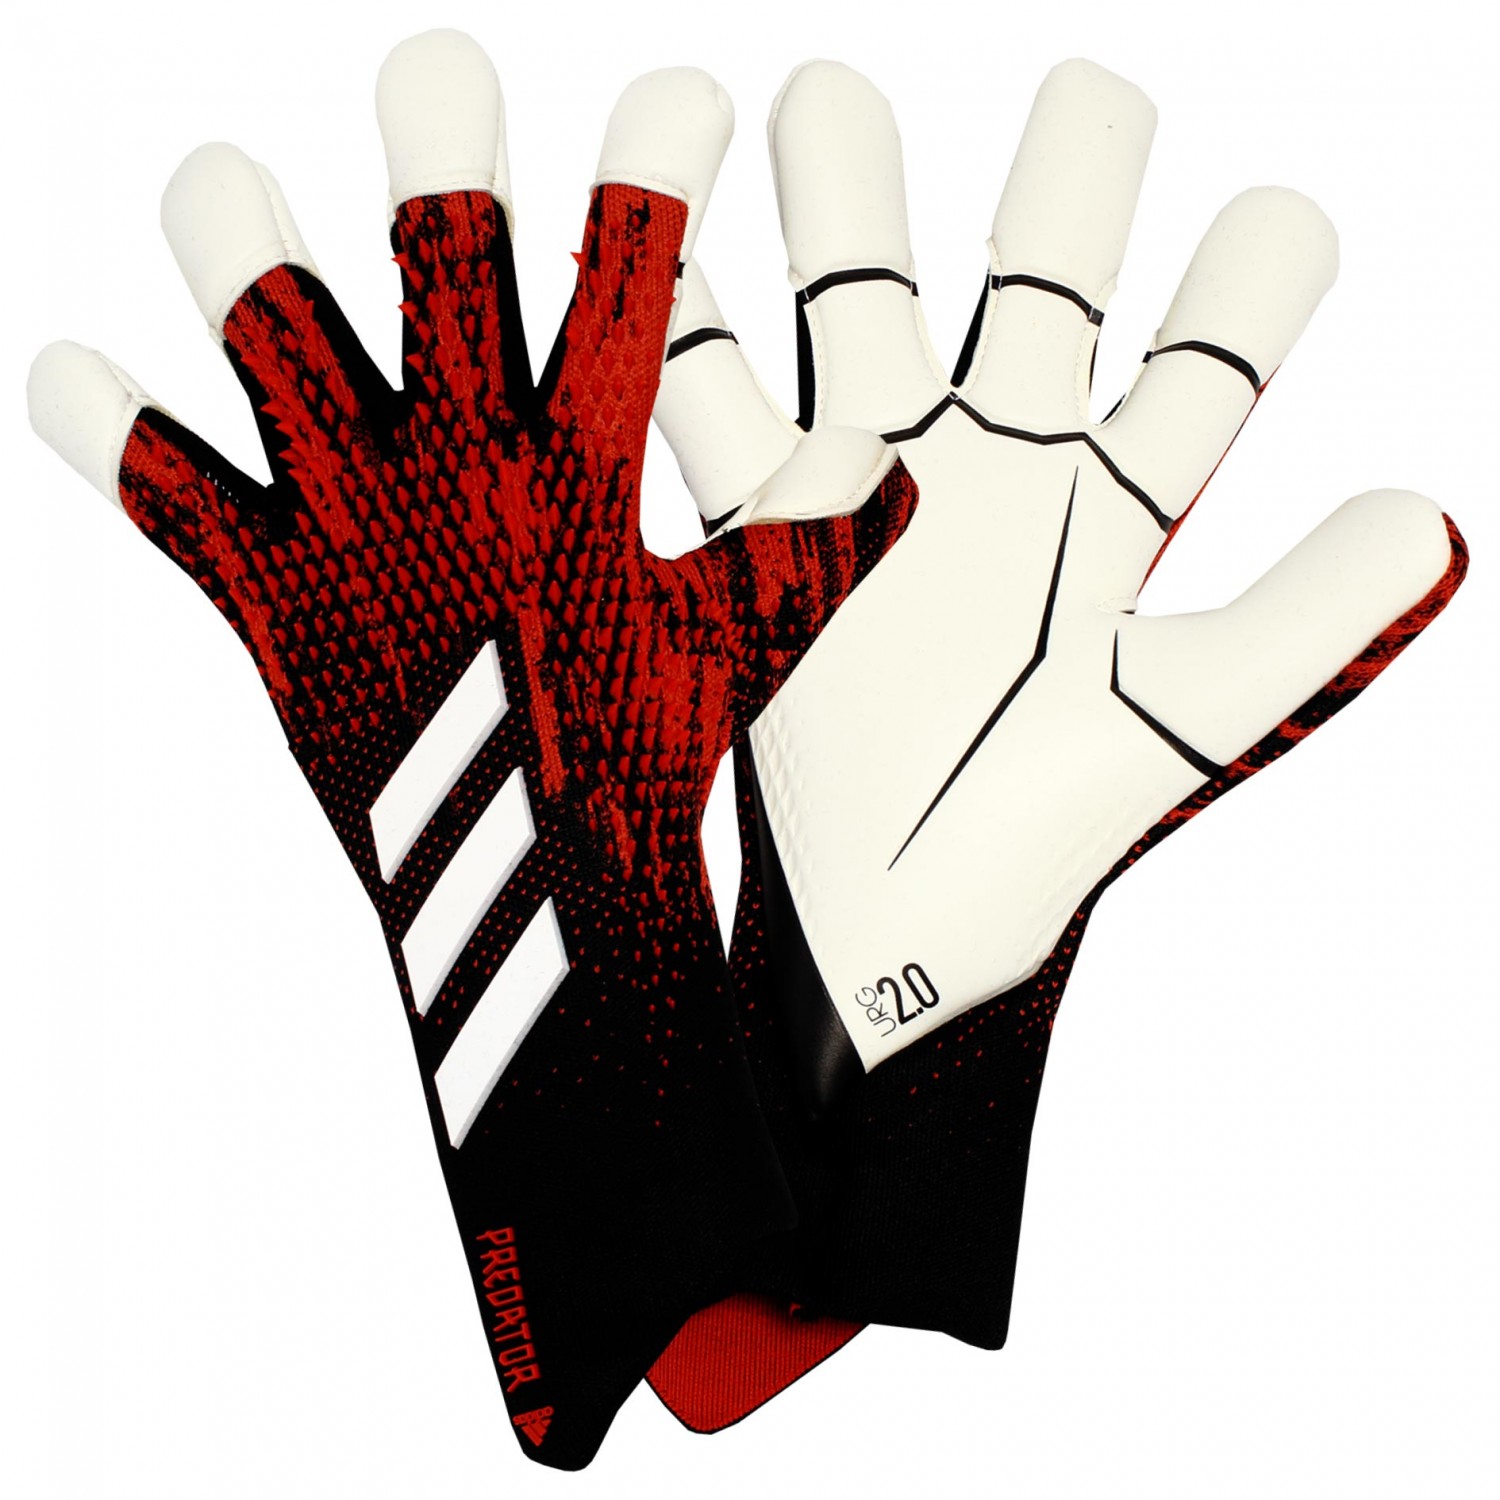 Adidas Predator 20 Ultimate Goalkeeper Glove Review.